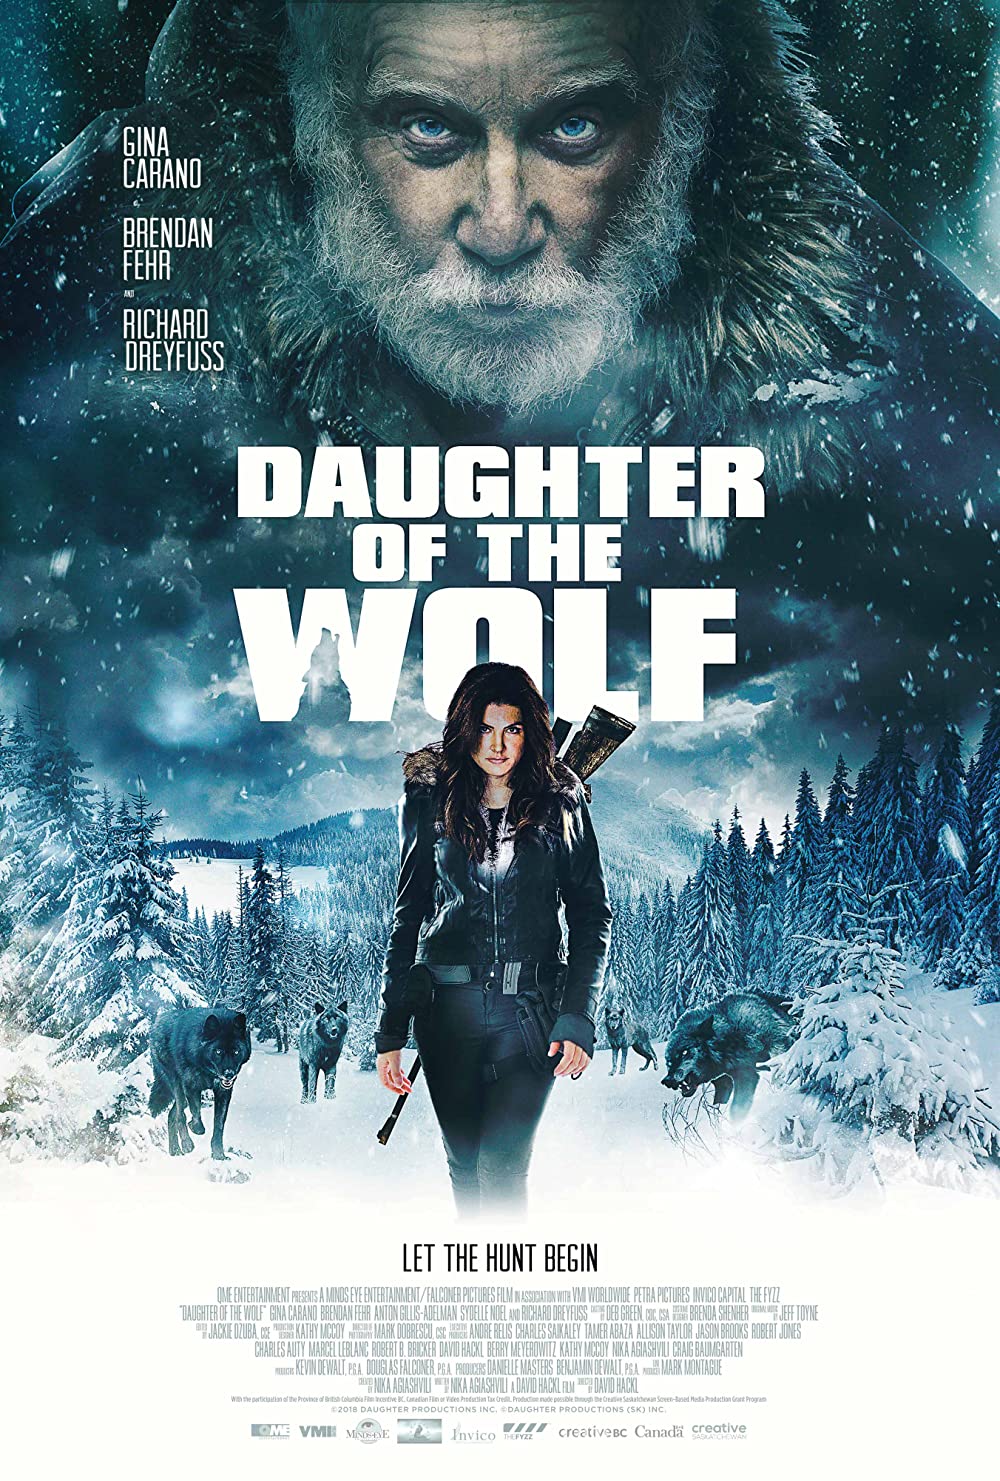 Filmbeschreibung zu Daughter of the Wolf